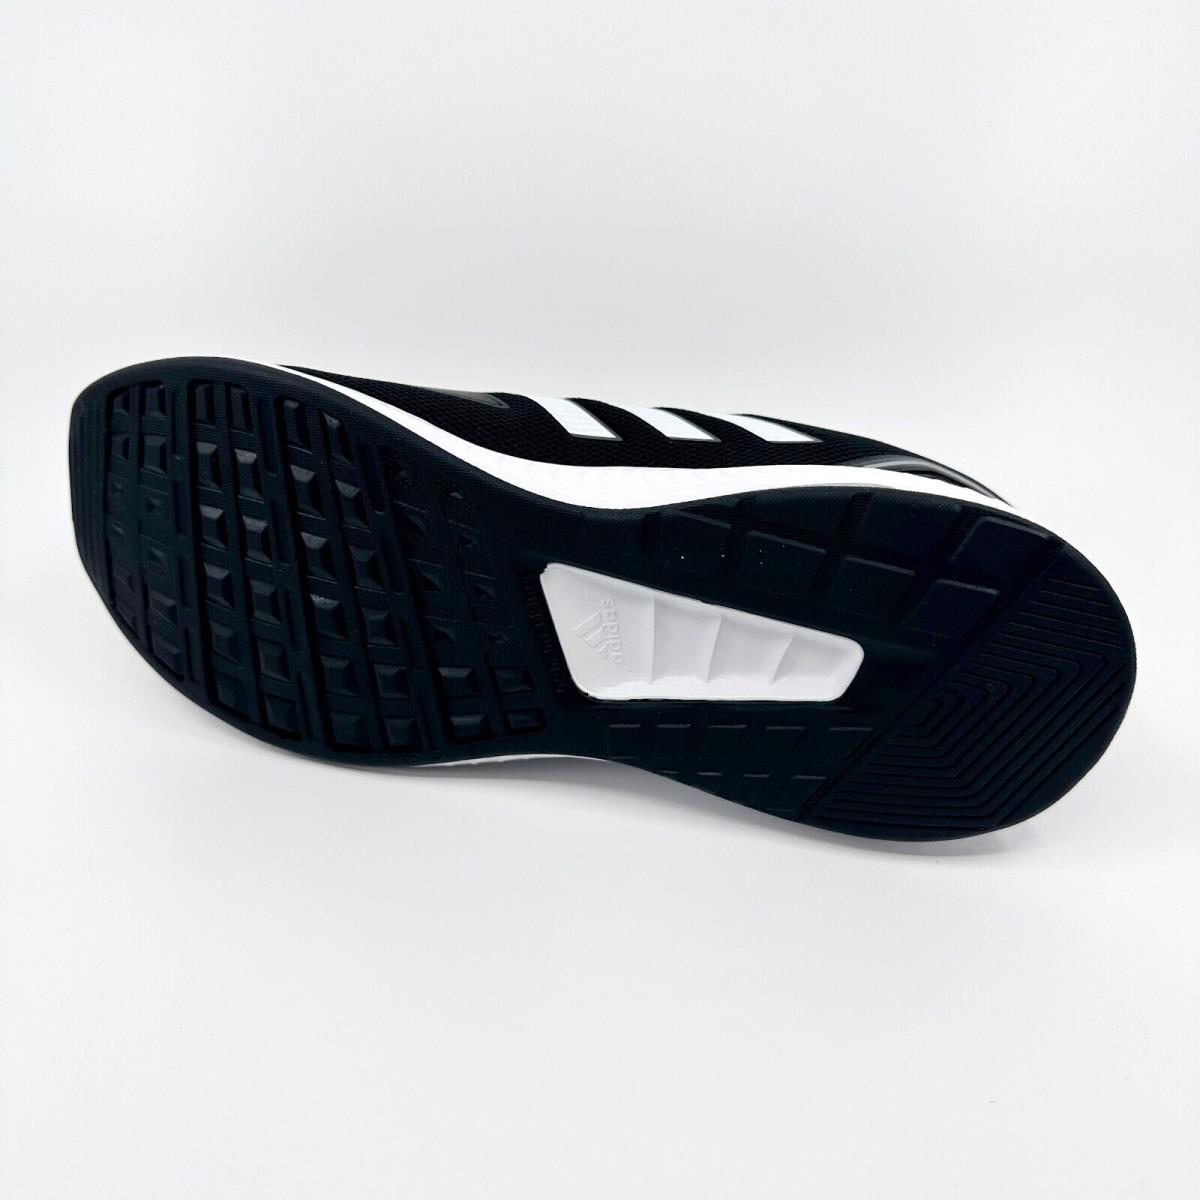 Adidas shoes Runfalcon - Black 4